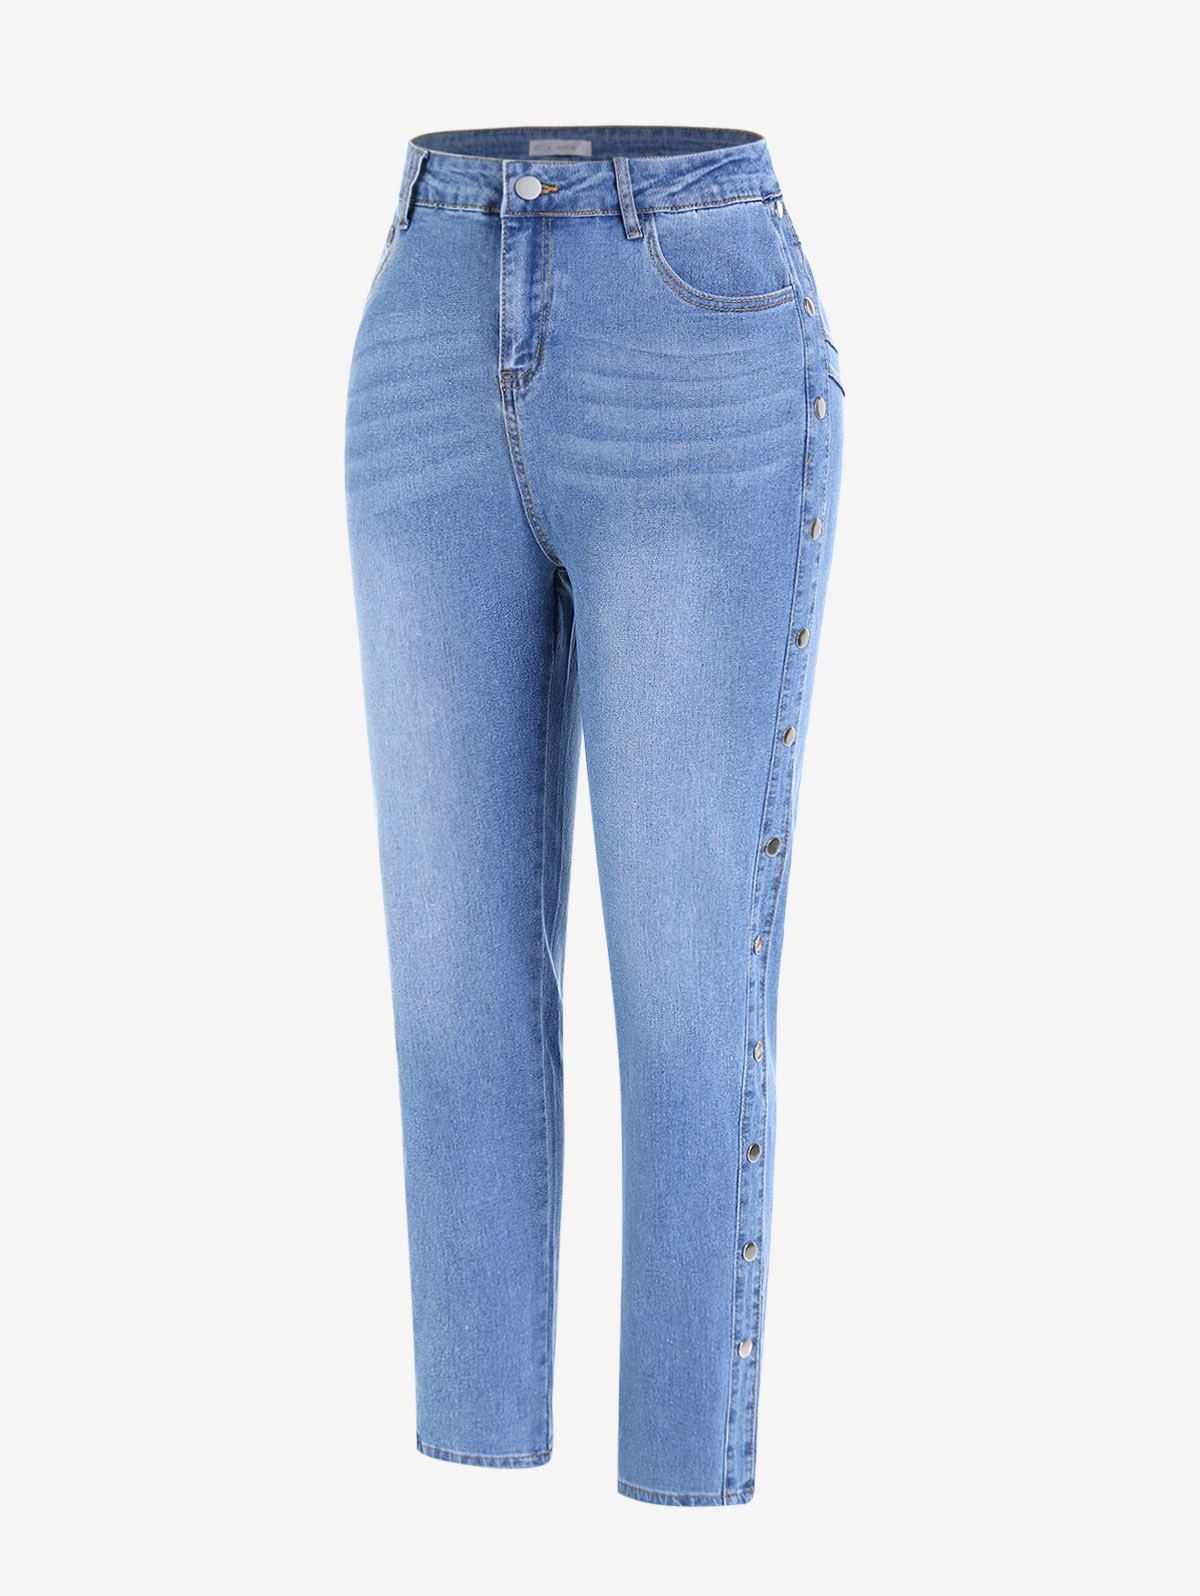 Plus Size Studded Light Wash Skinny Jeans - BLUE L